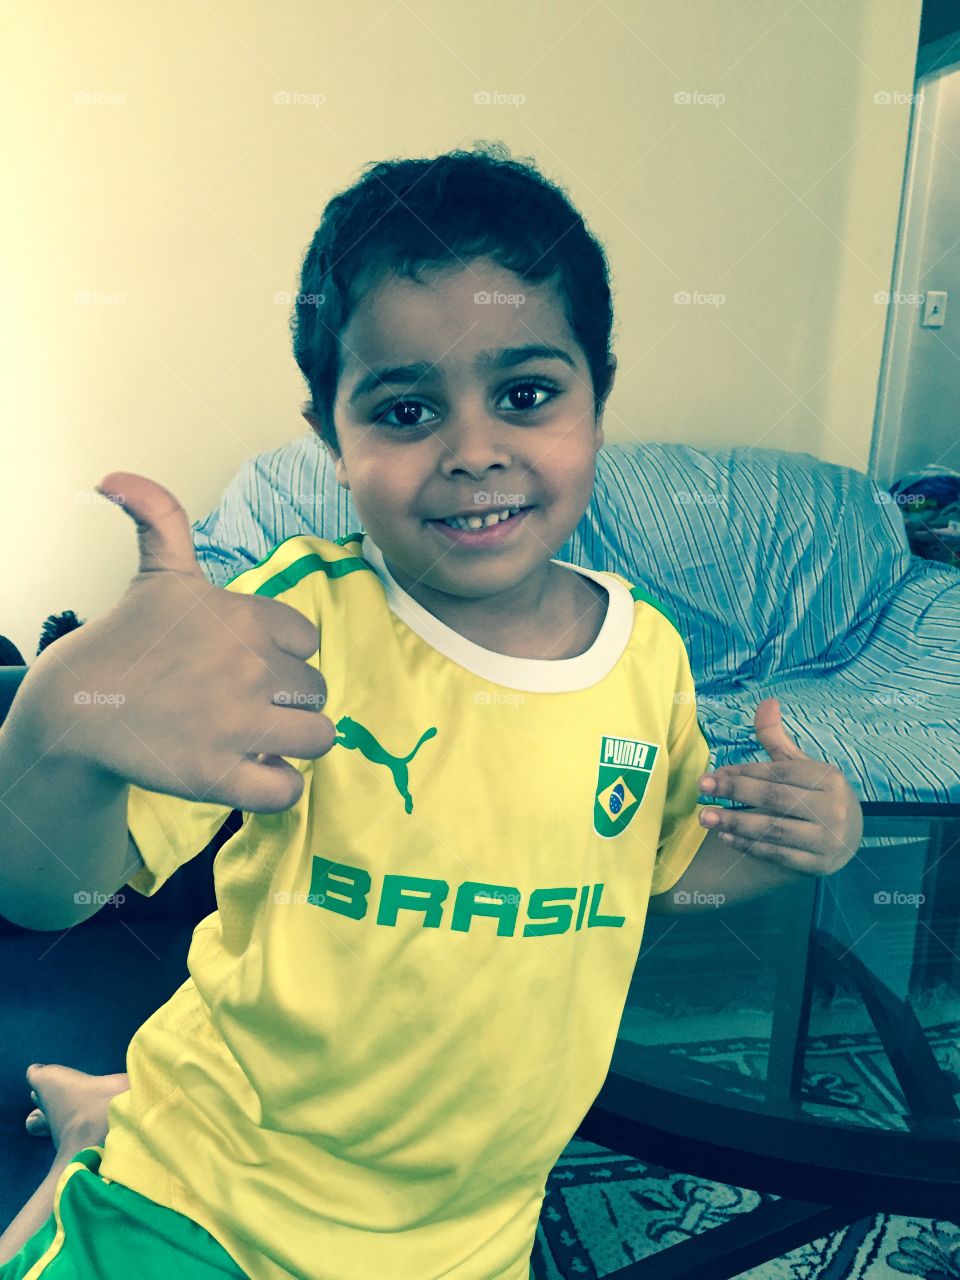 Forca Brasil!. Cute boy in yellow shirt